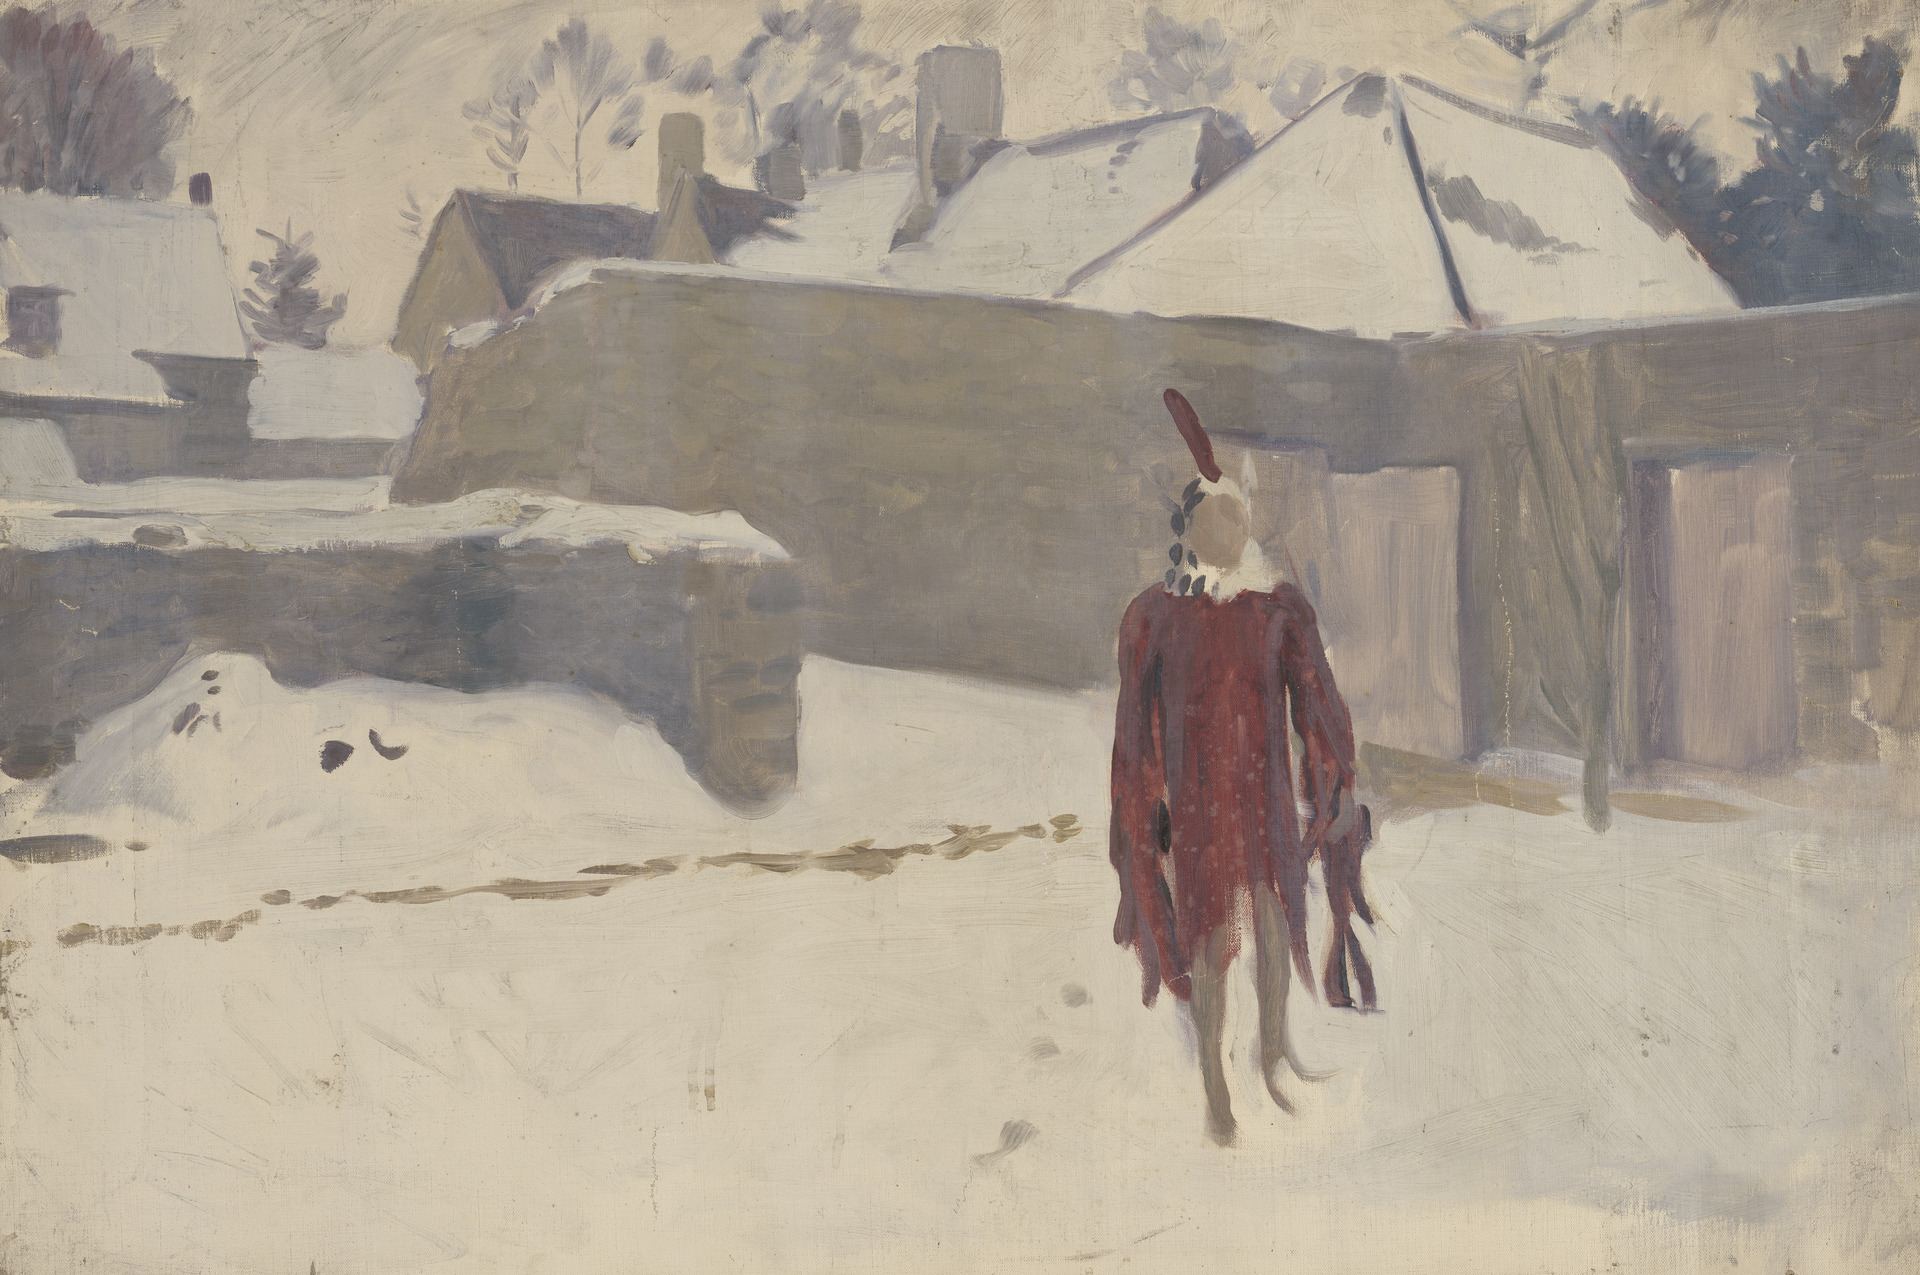 Mannikin in the Snow by John Singer Sargent - ca. 1891–93 - 63.5 x 76.2 cm Yale University Art Gallery